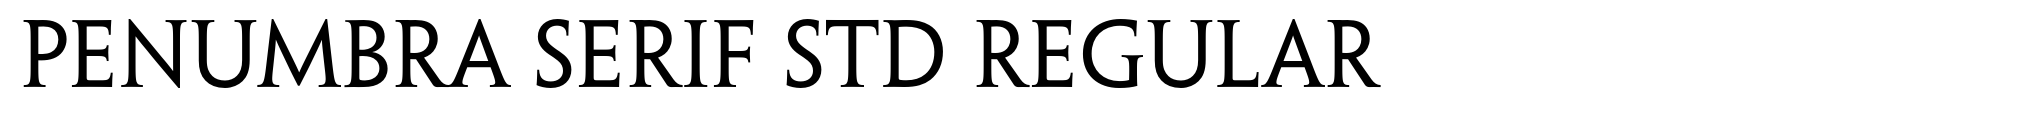 Penumbra Serif Std Regular image